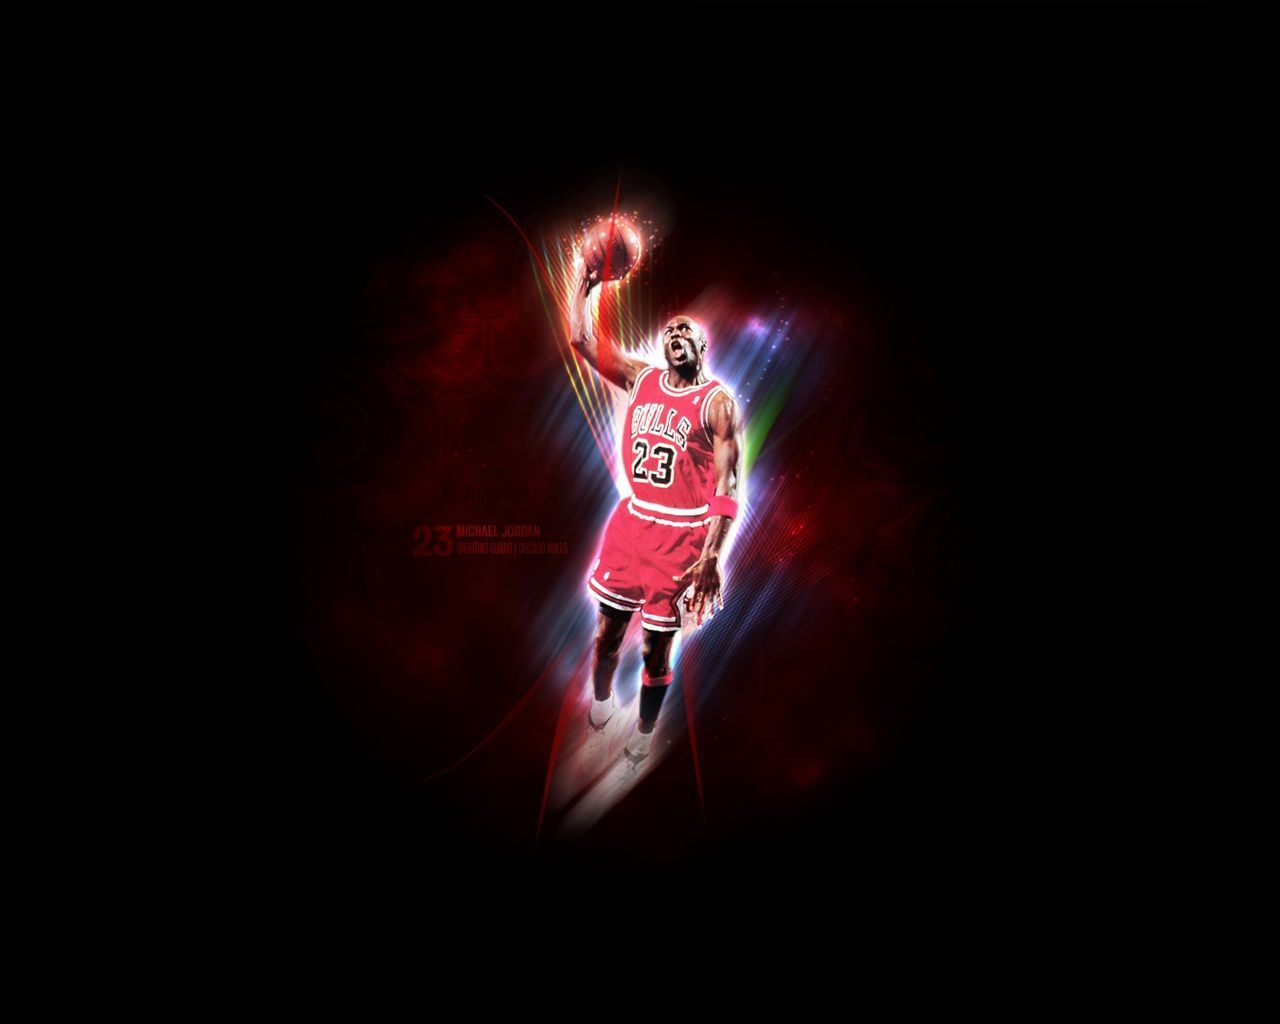 Michael Jordan Hd Wallpaper - HD Wallpapers and Pictures